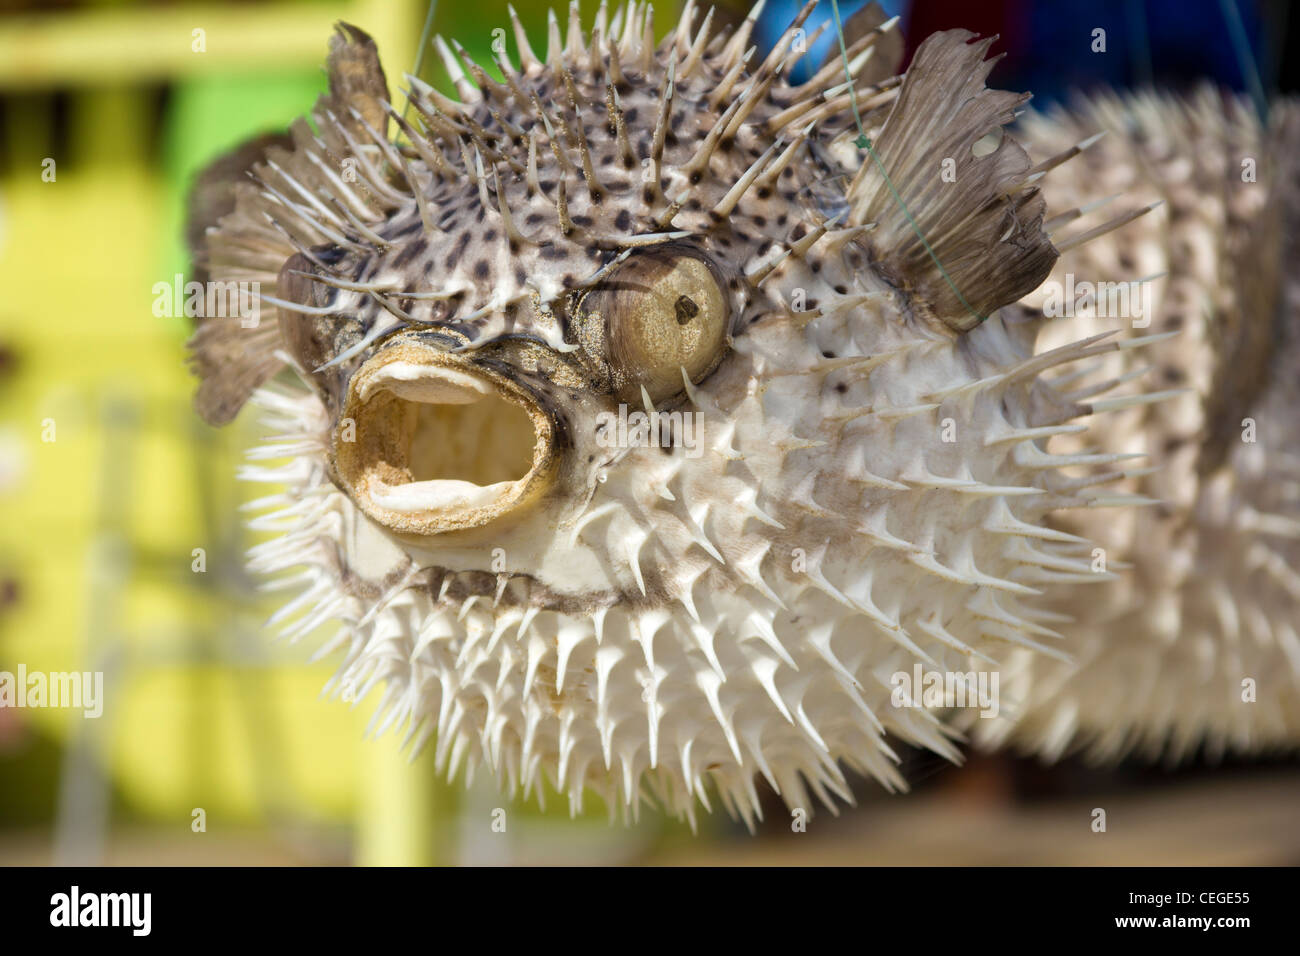 Dried Pufferfish at Barbados Market Stock Photo - Alamy